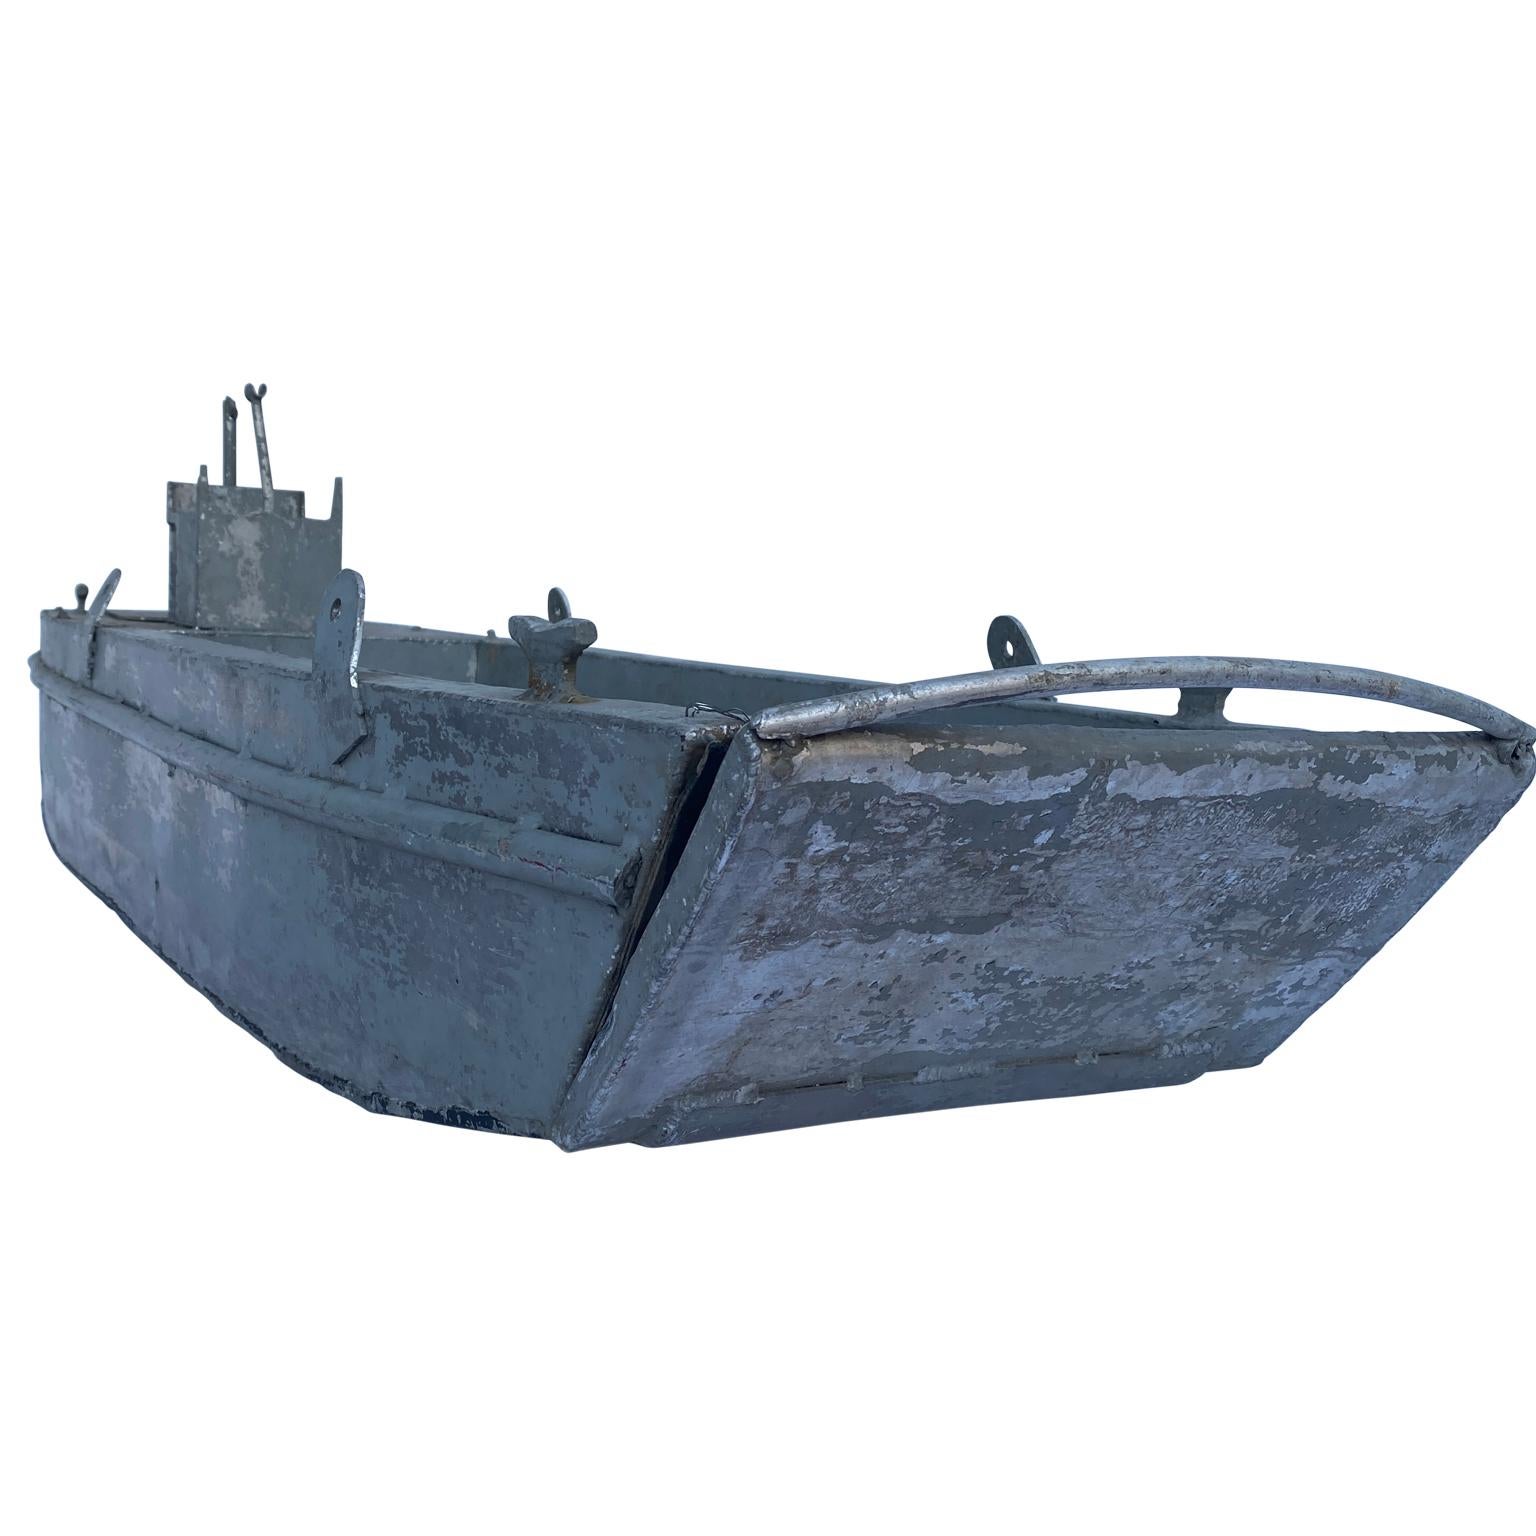 ww2 landing craft for sale